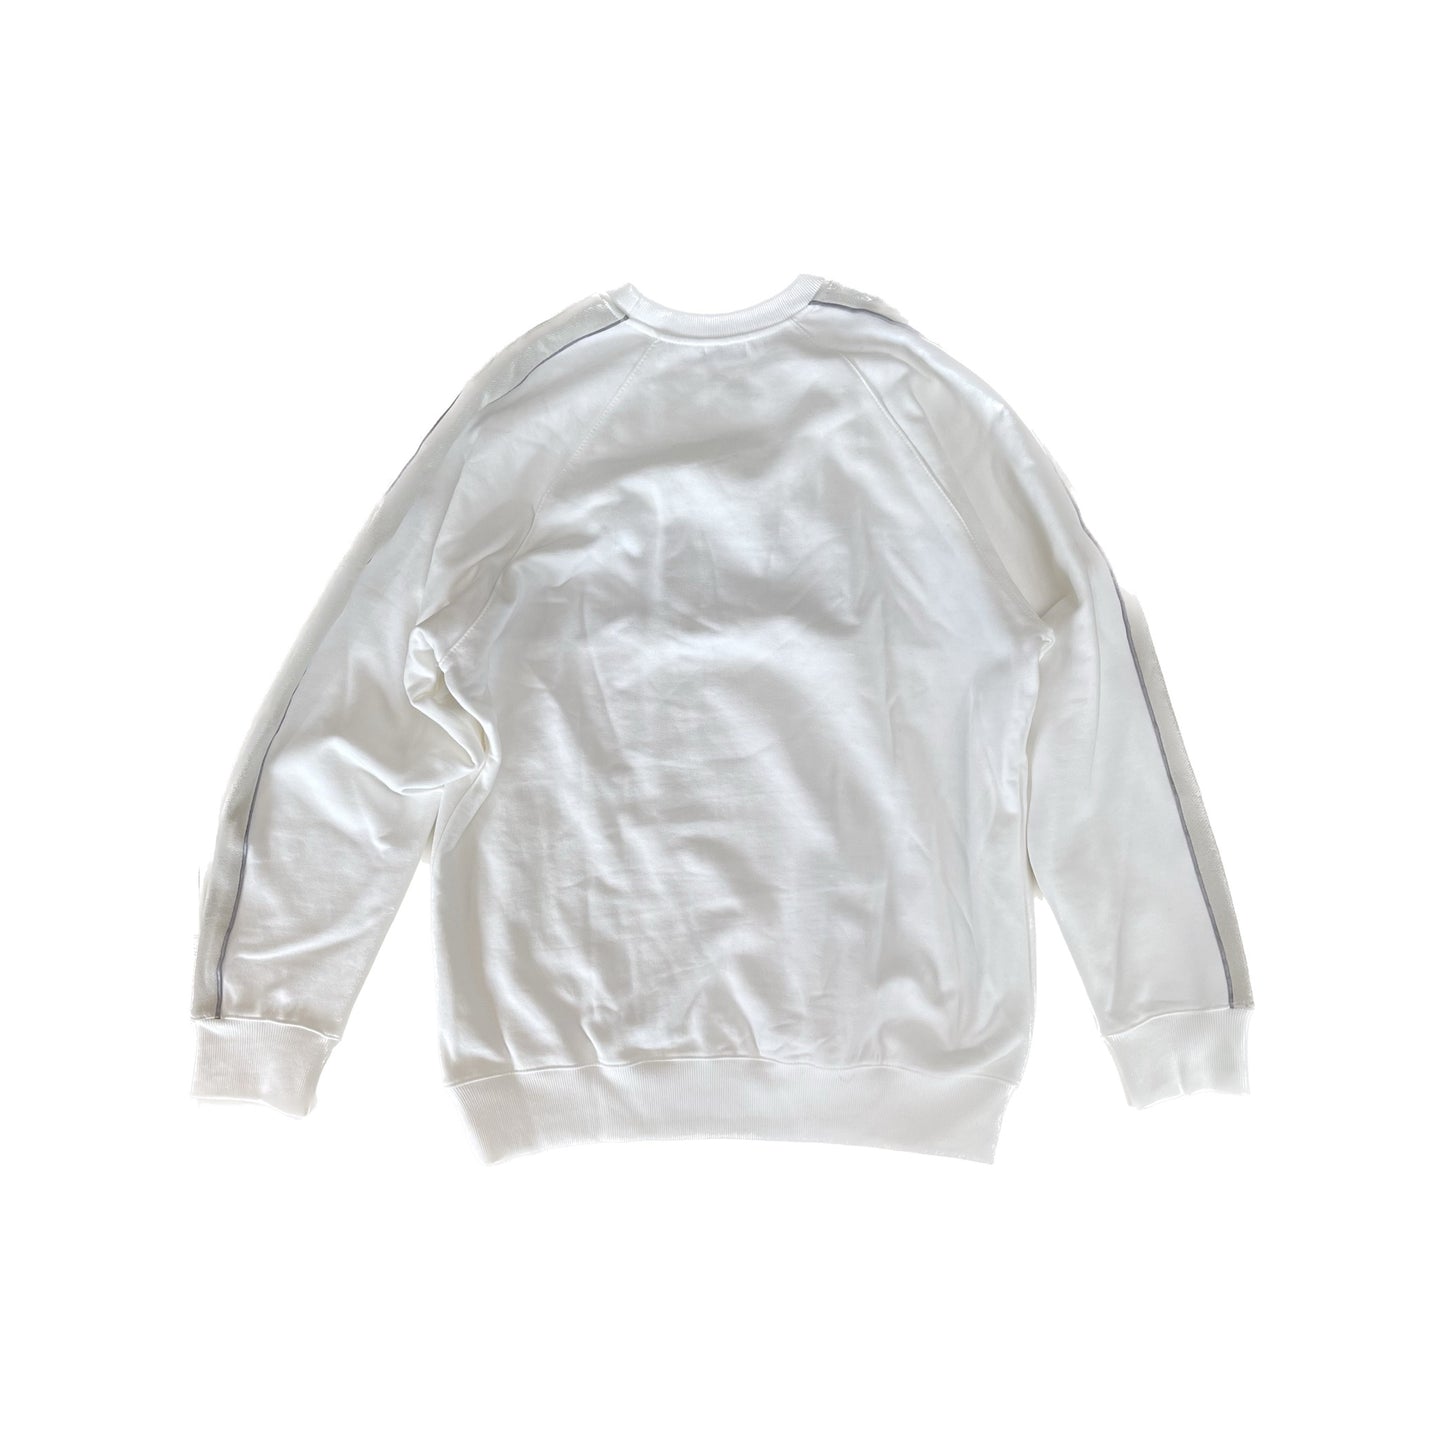 school jersey sweatshirt / white / スクールスウェット